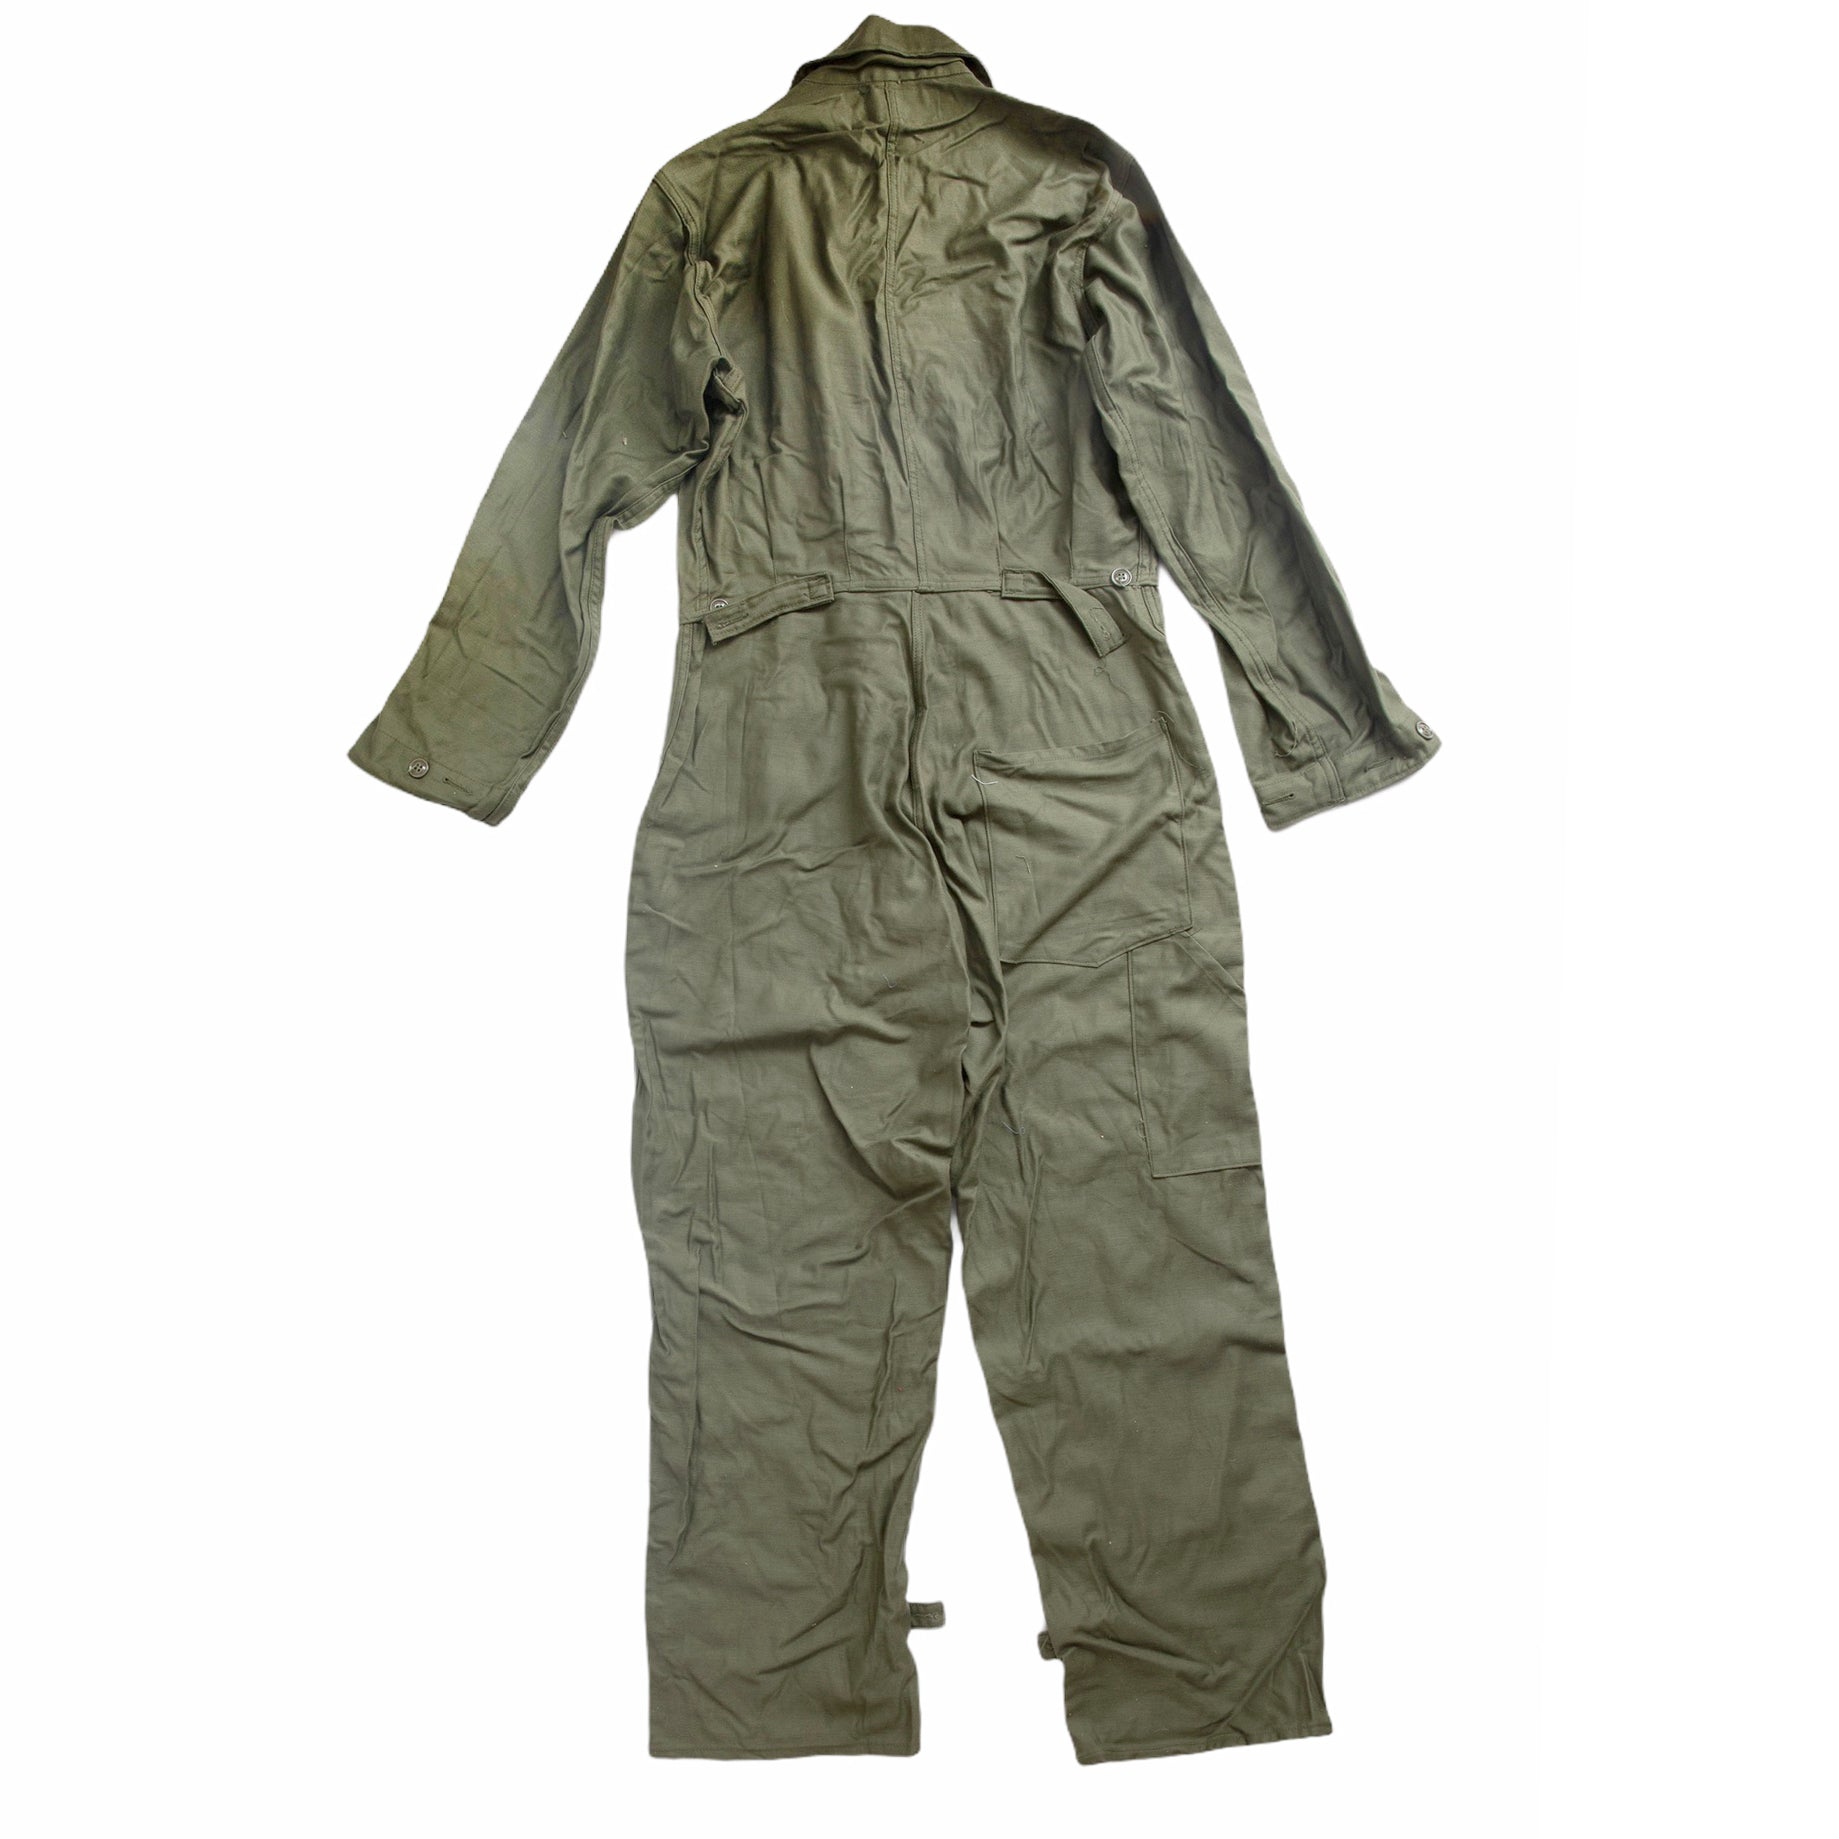 Vintage Army Flight Suit Coveralls - Medium